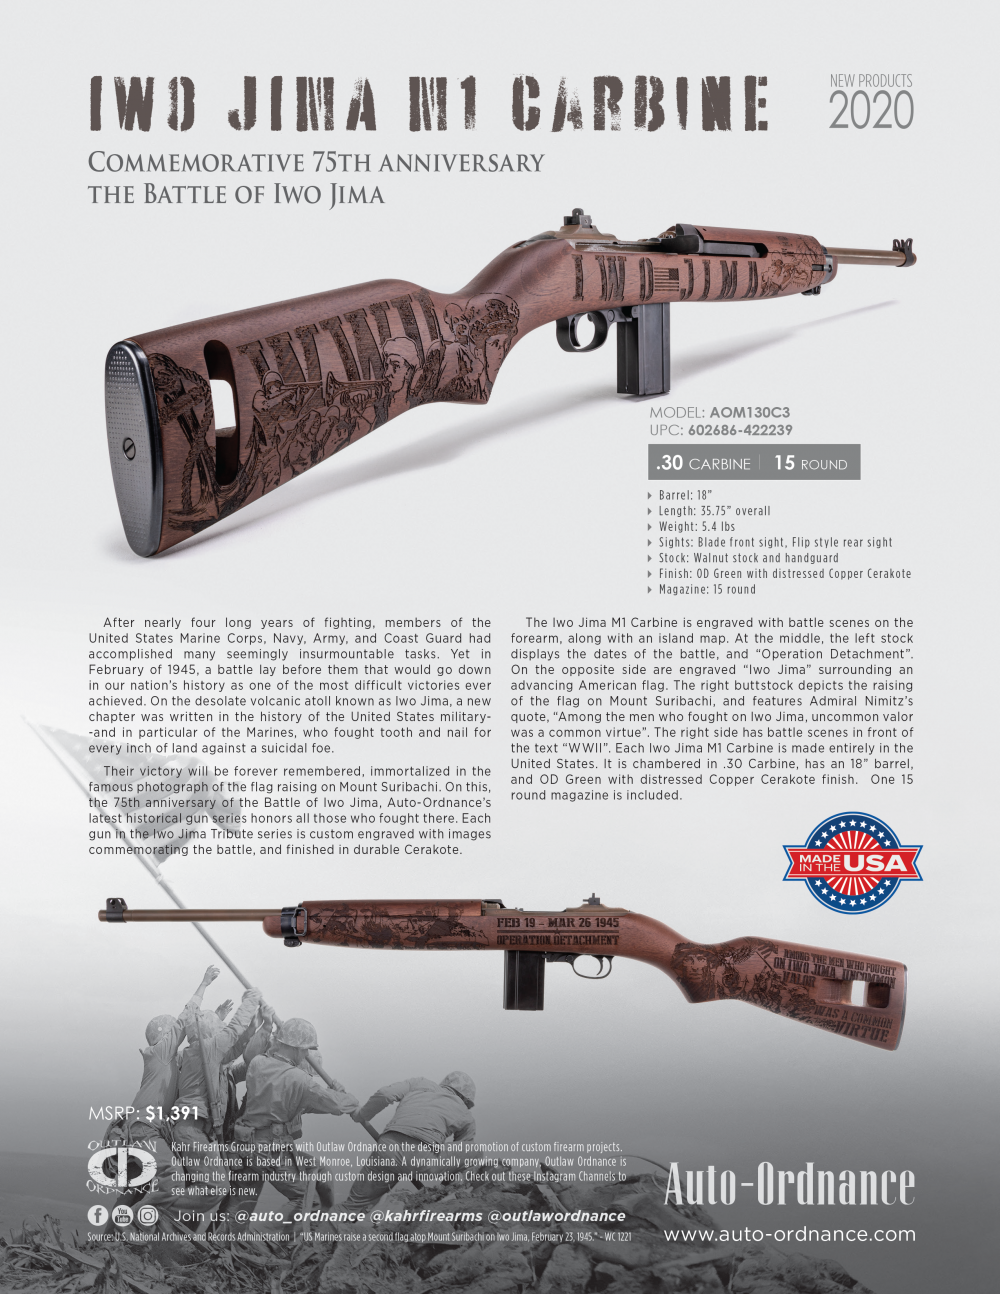 Thompson Auto-Ordnance's commemorative Iwo Jima M1 Carbine.